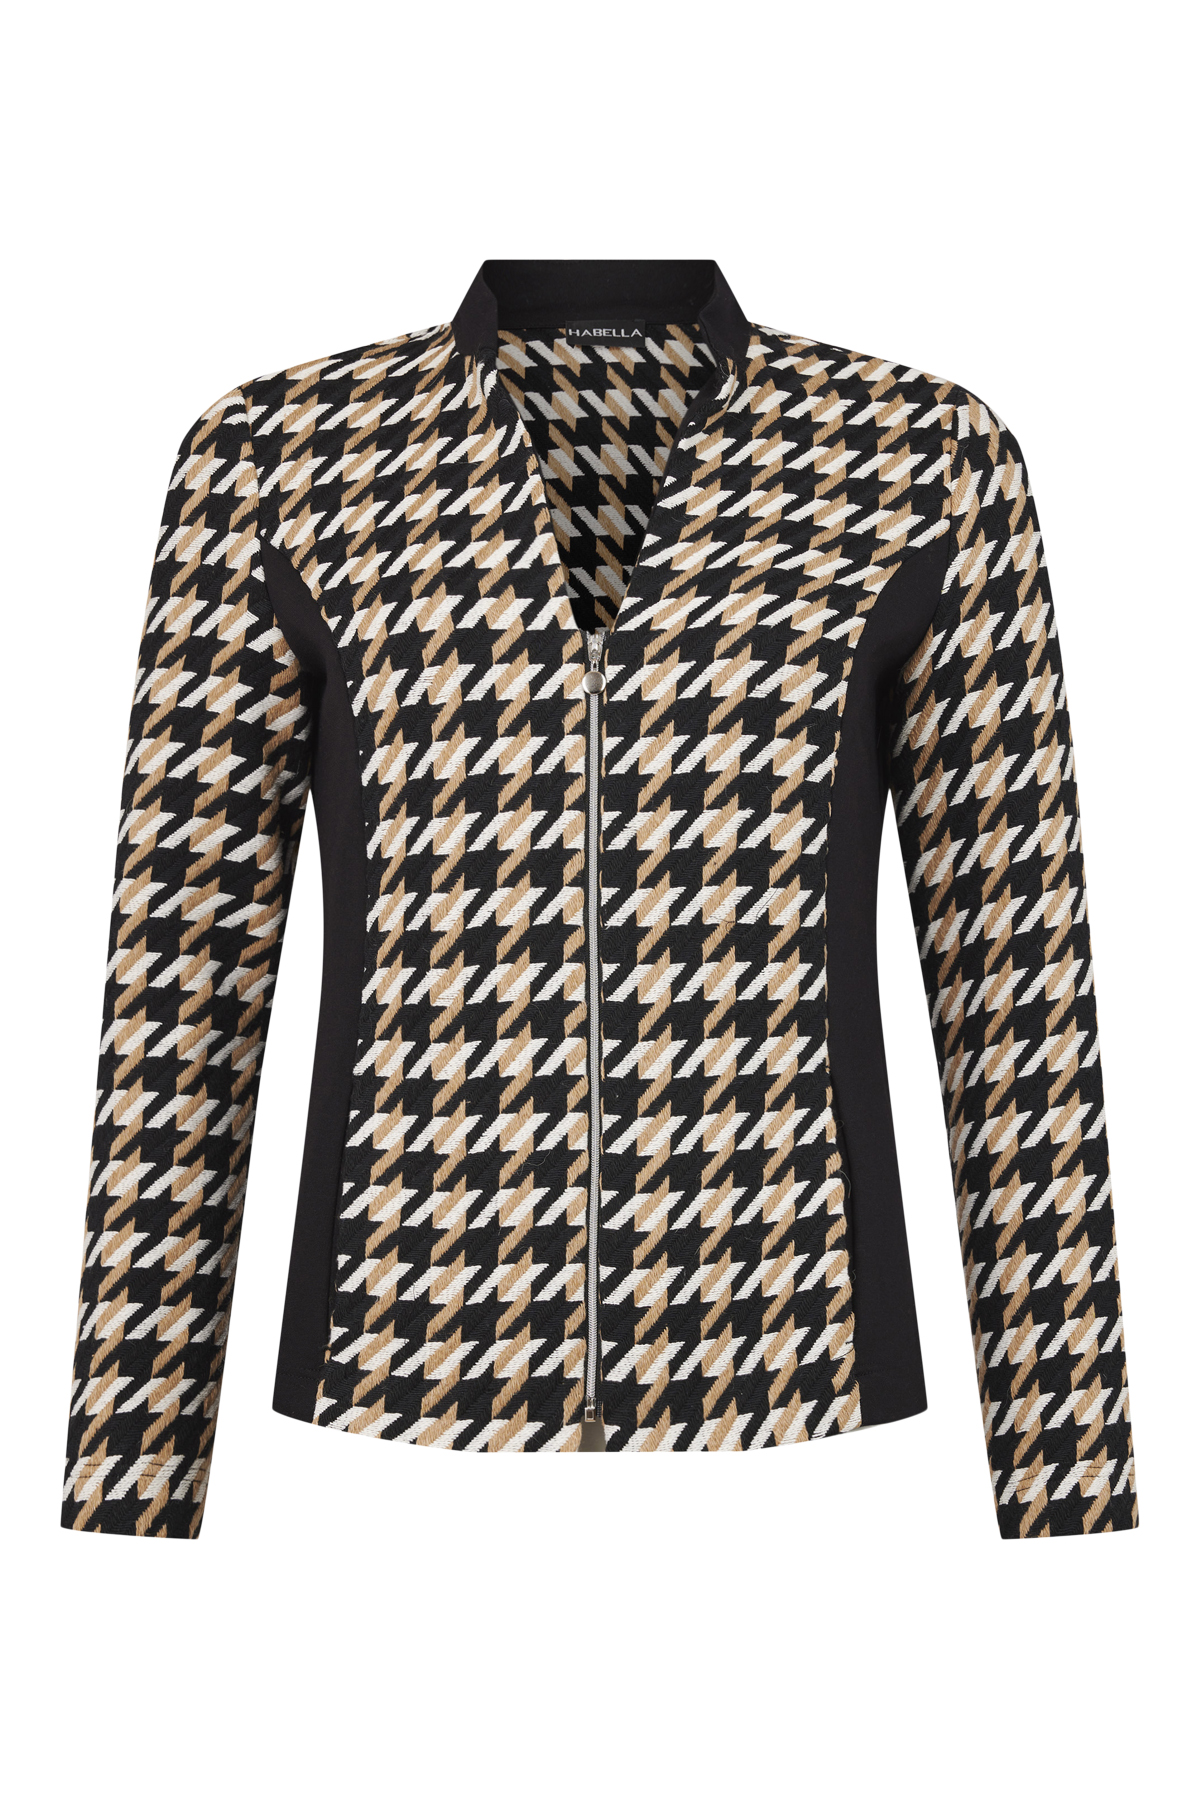 Habella 57144 Black/Beige Jacket - Gertrude Fashions